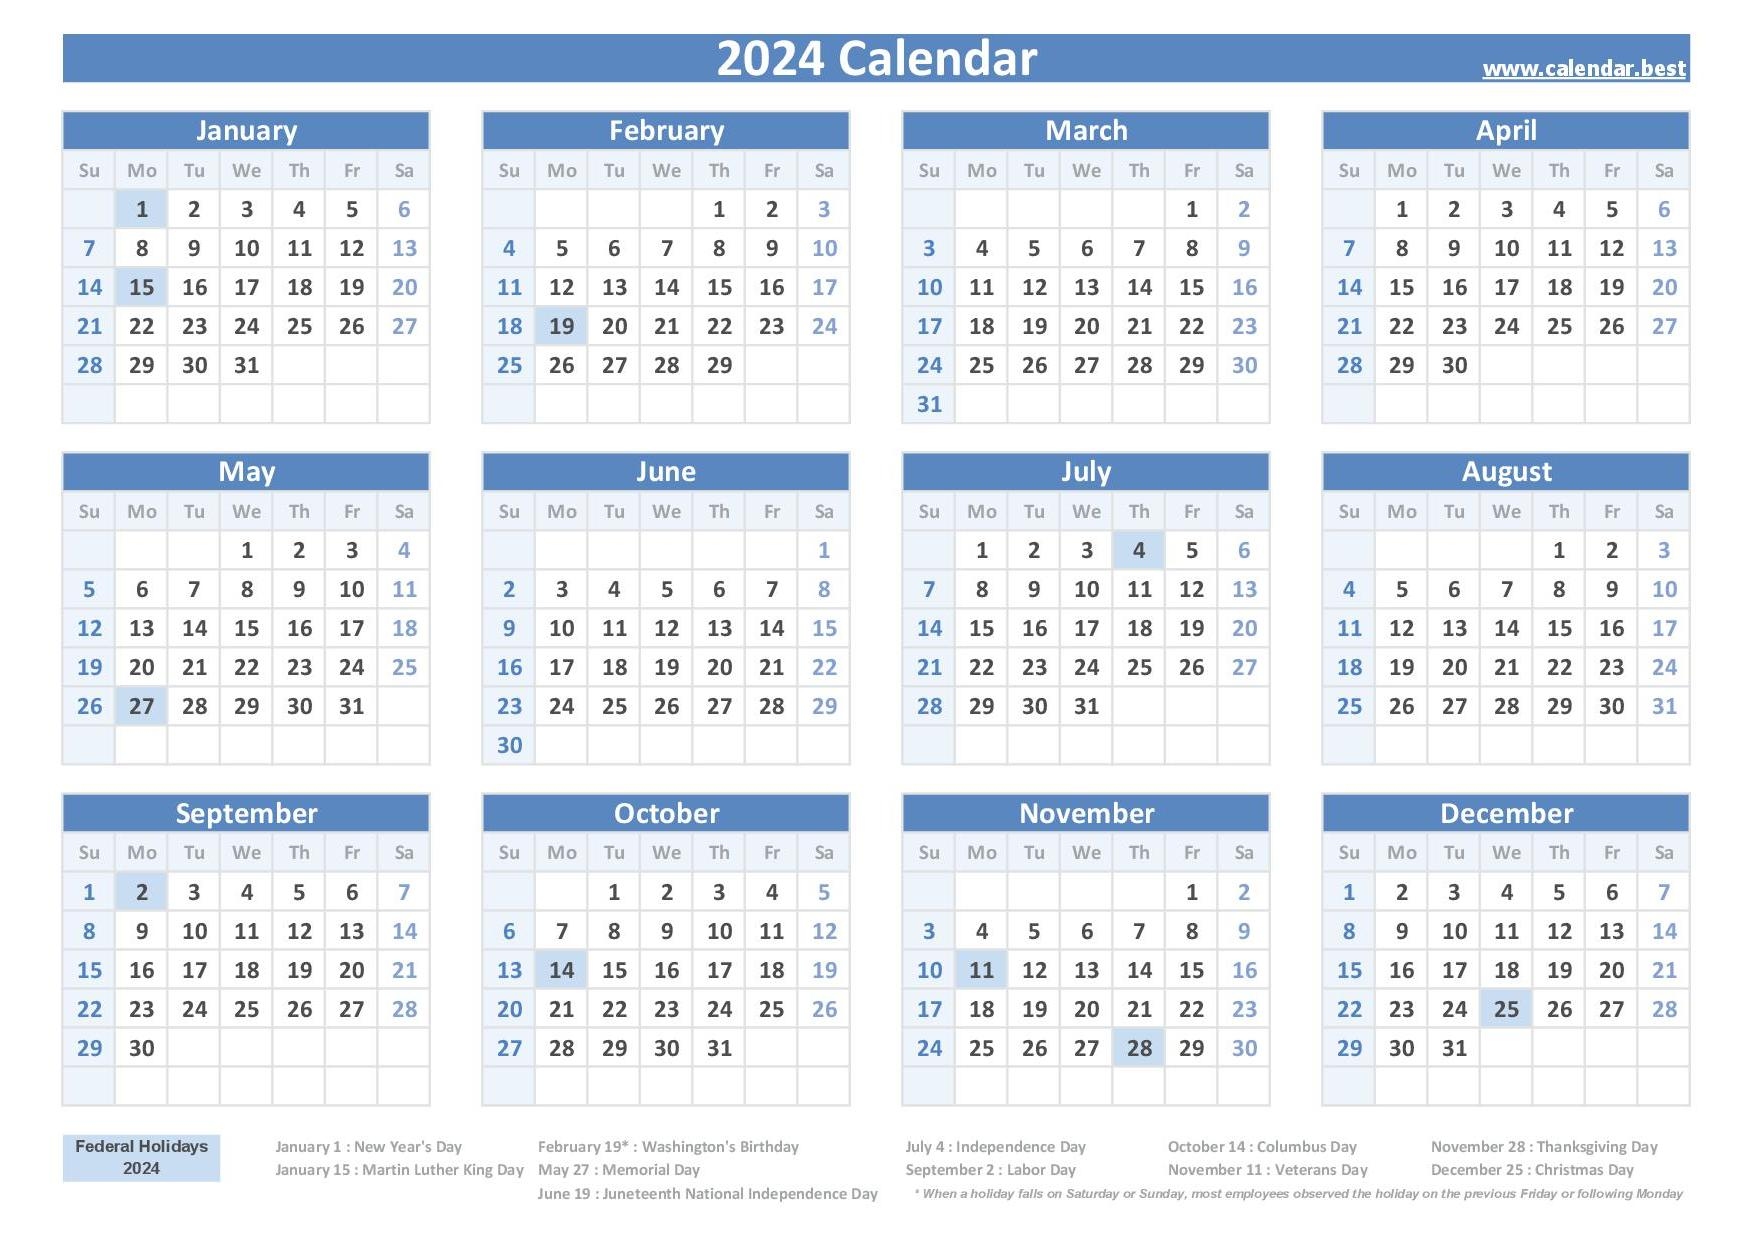 2024 Us Federal Holiday Calendar Printable Bill Marjie - Free Printable 2024 Calendar With Holidays